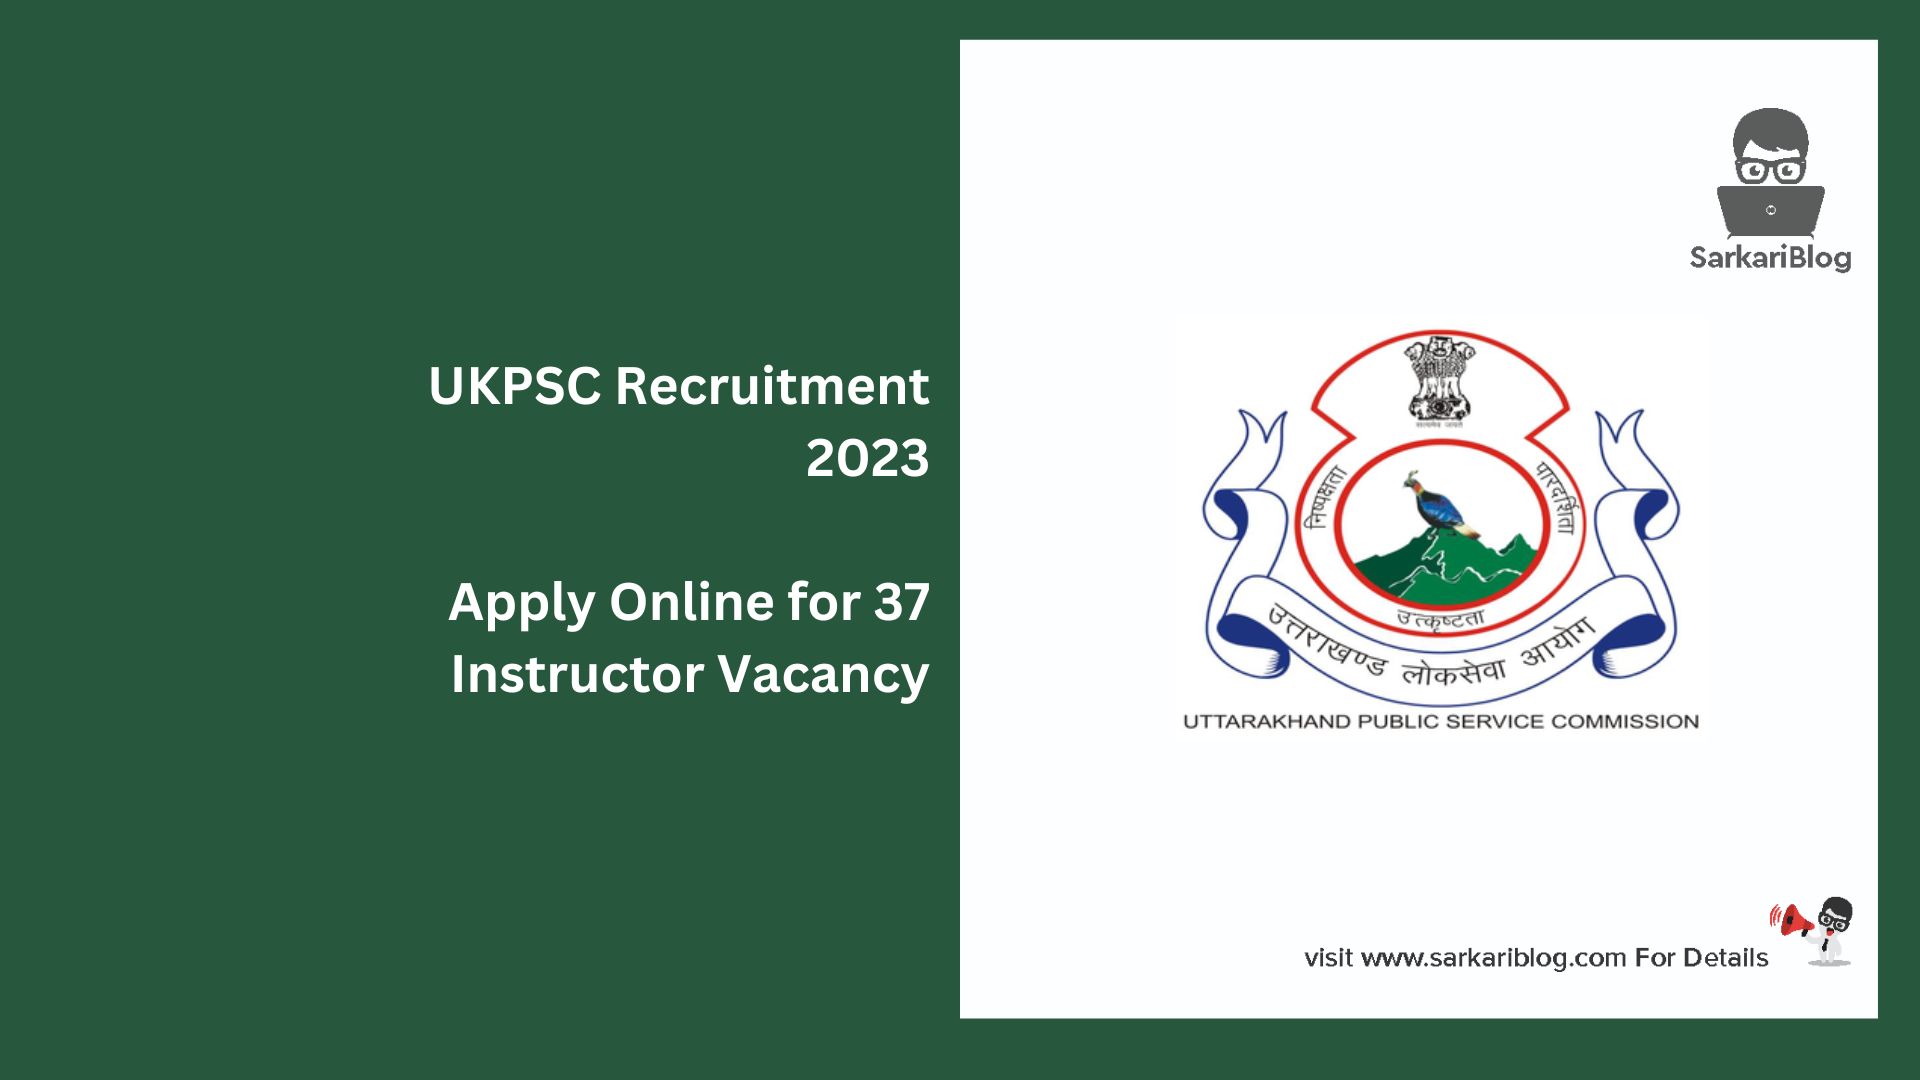 UKPSC Recruitment 2023